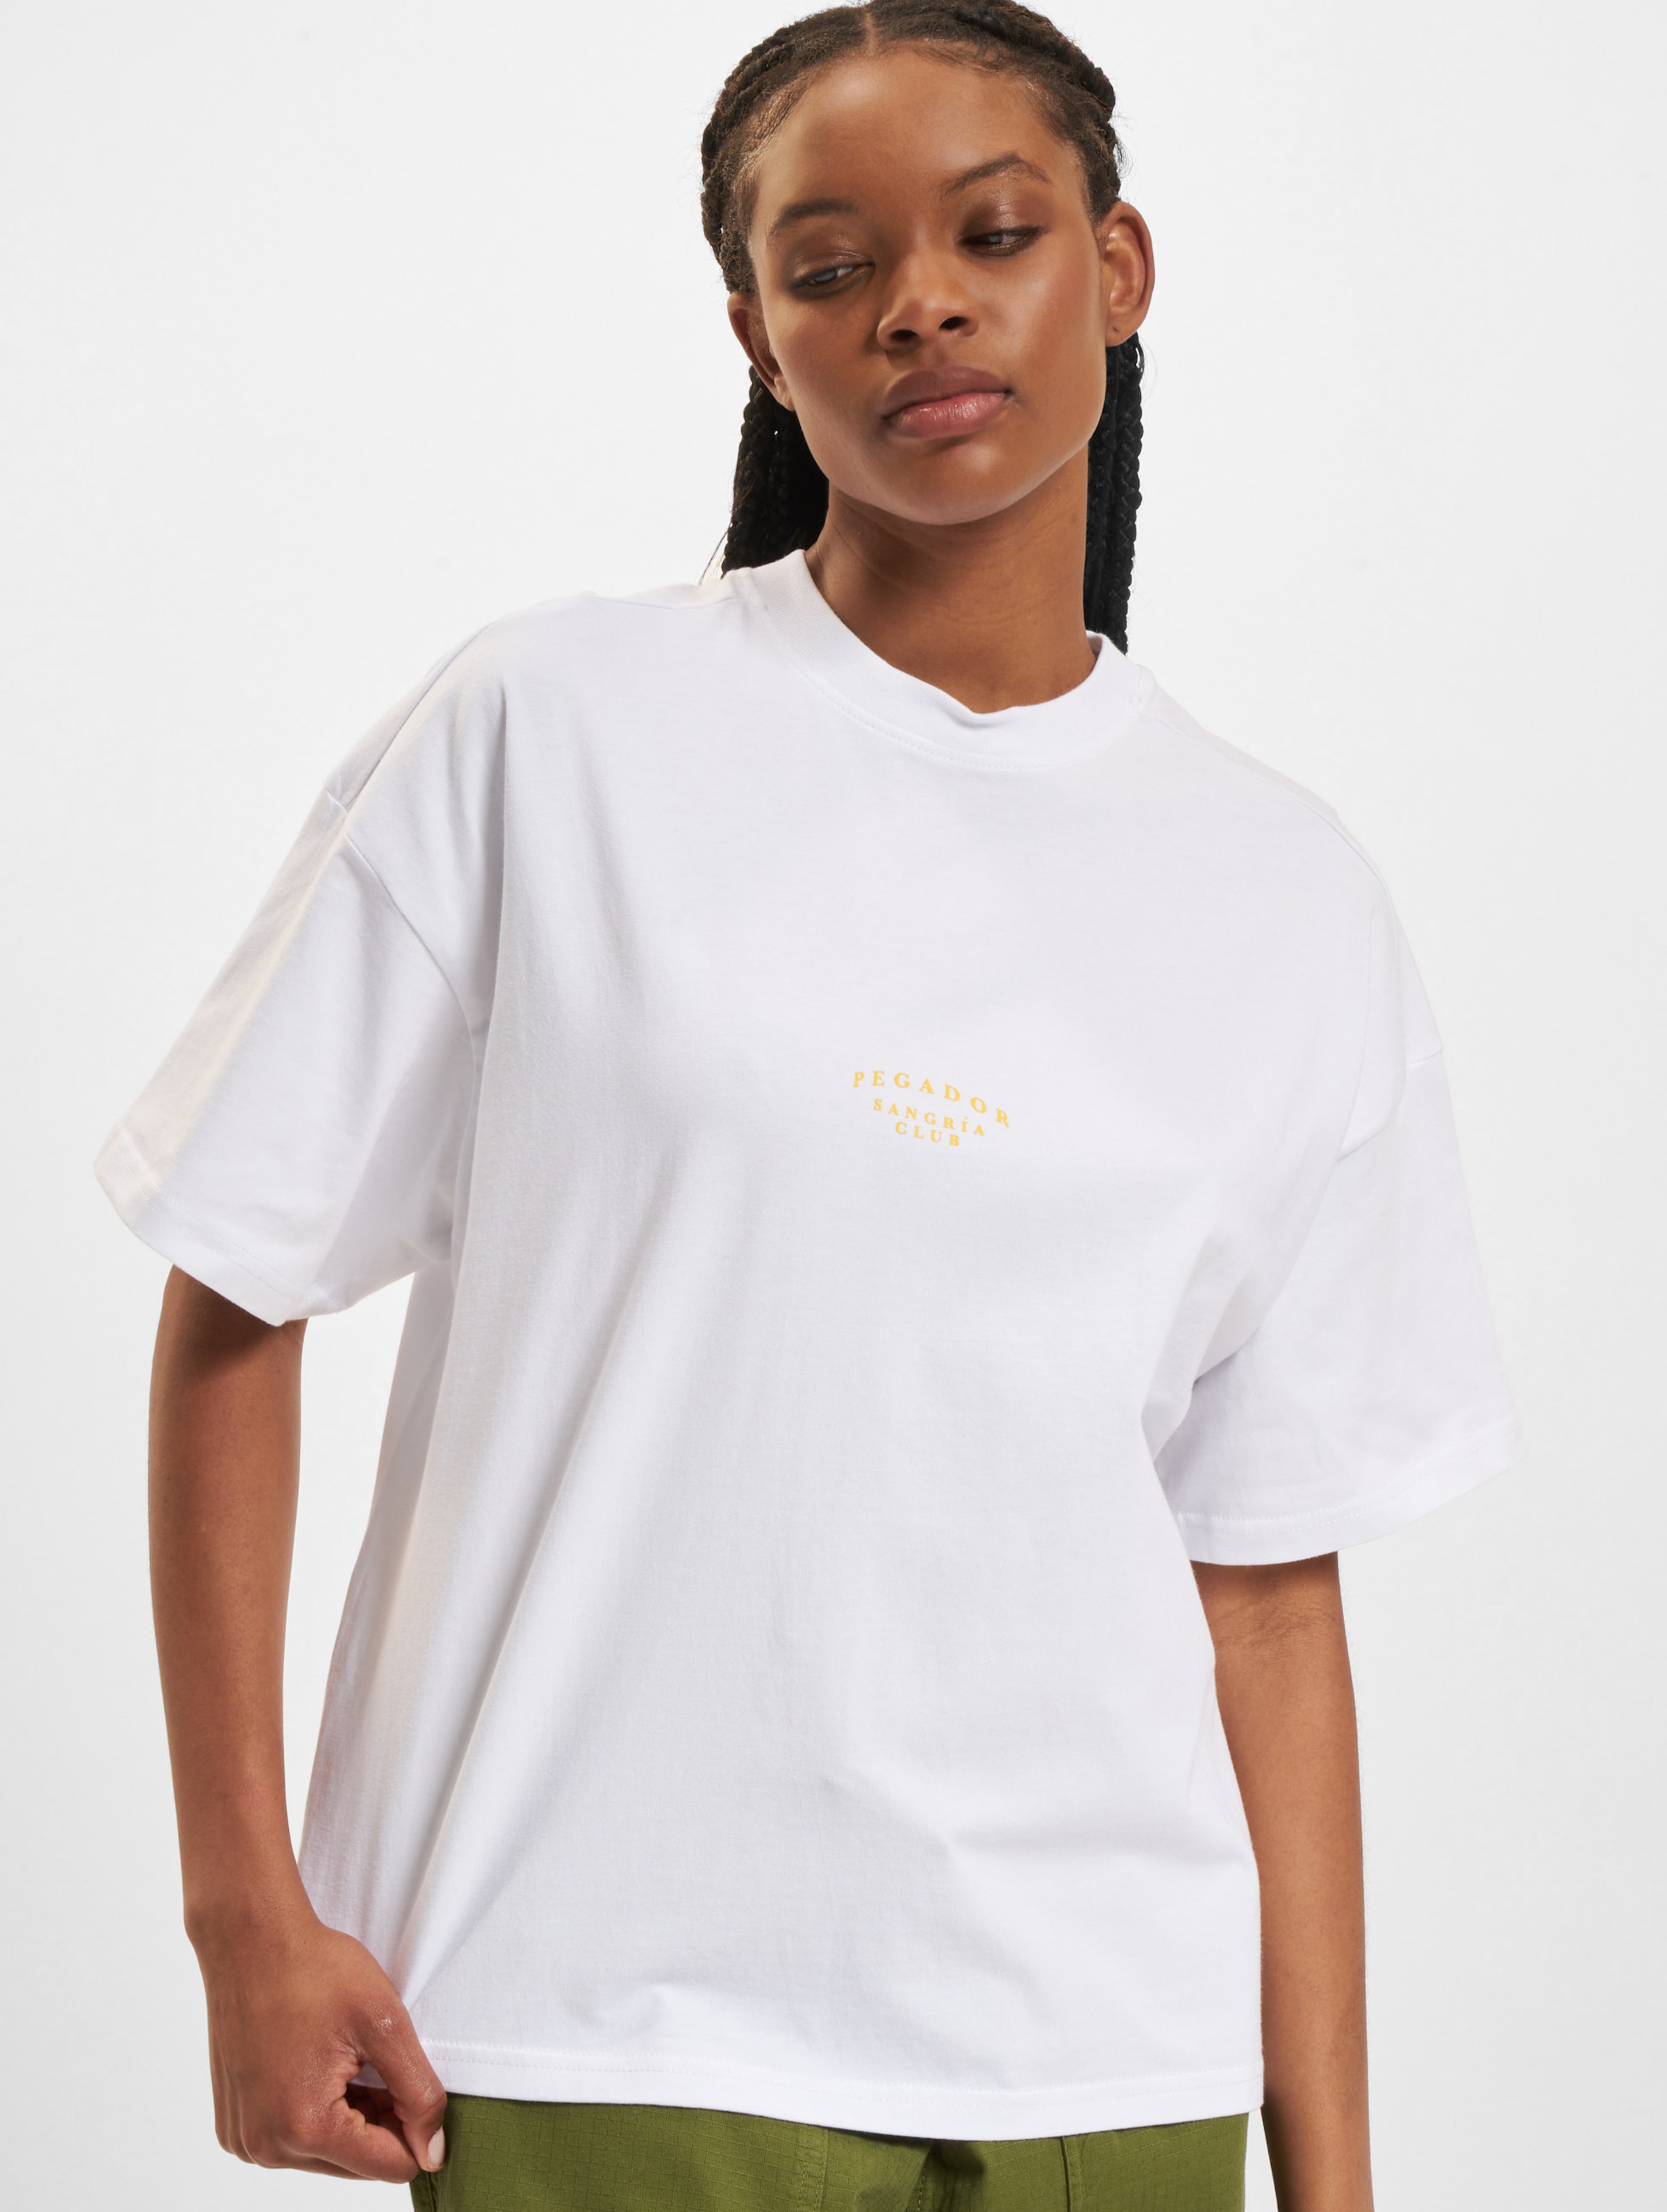 PEGADOR Pelo Heavy Oversized T-Shirts Frauen,Unisex op kleur wit, Maat M